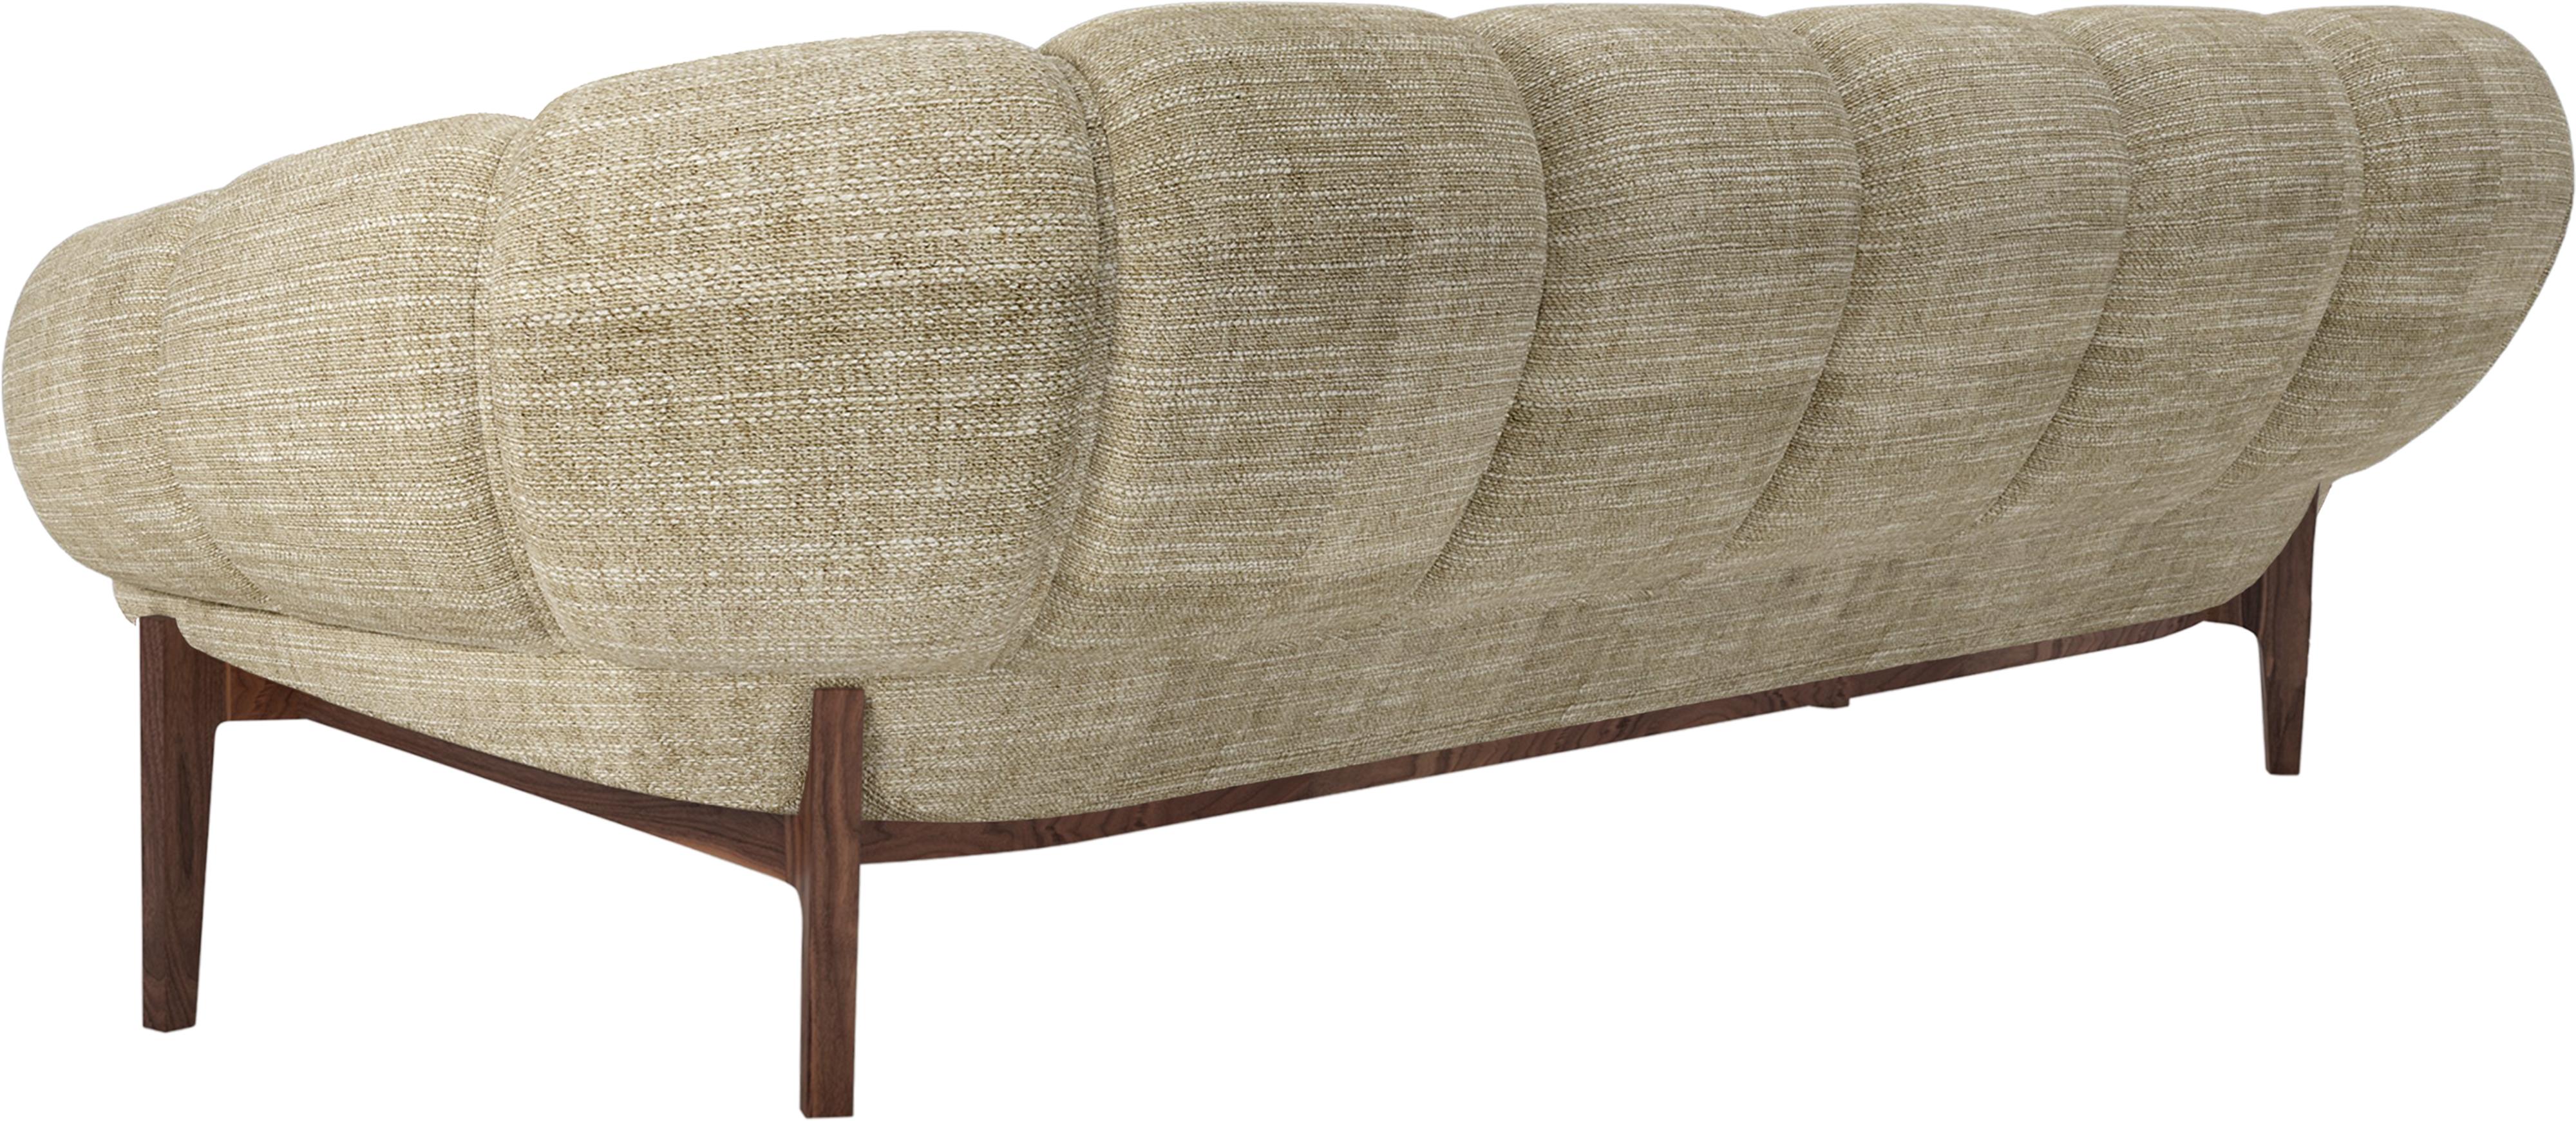 Fabric 'Croissant' Sofa by Illum Wikkelsø for GUBI with Oak Legs For Sale 5